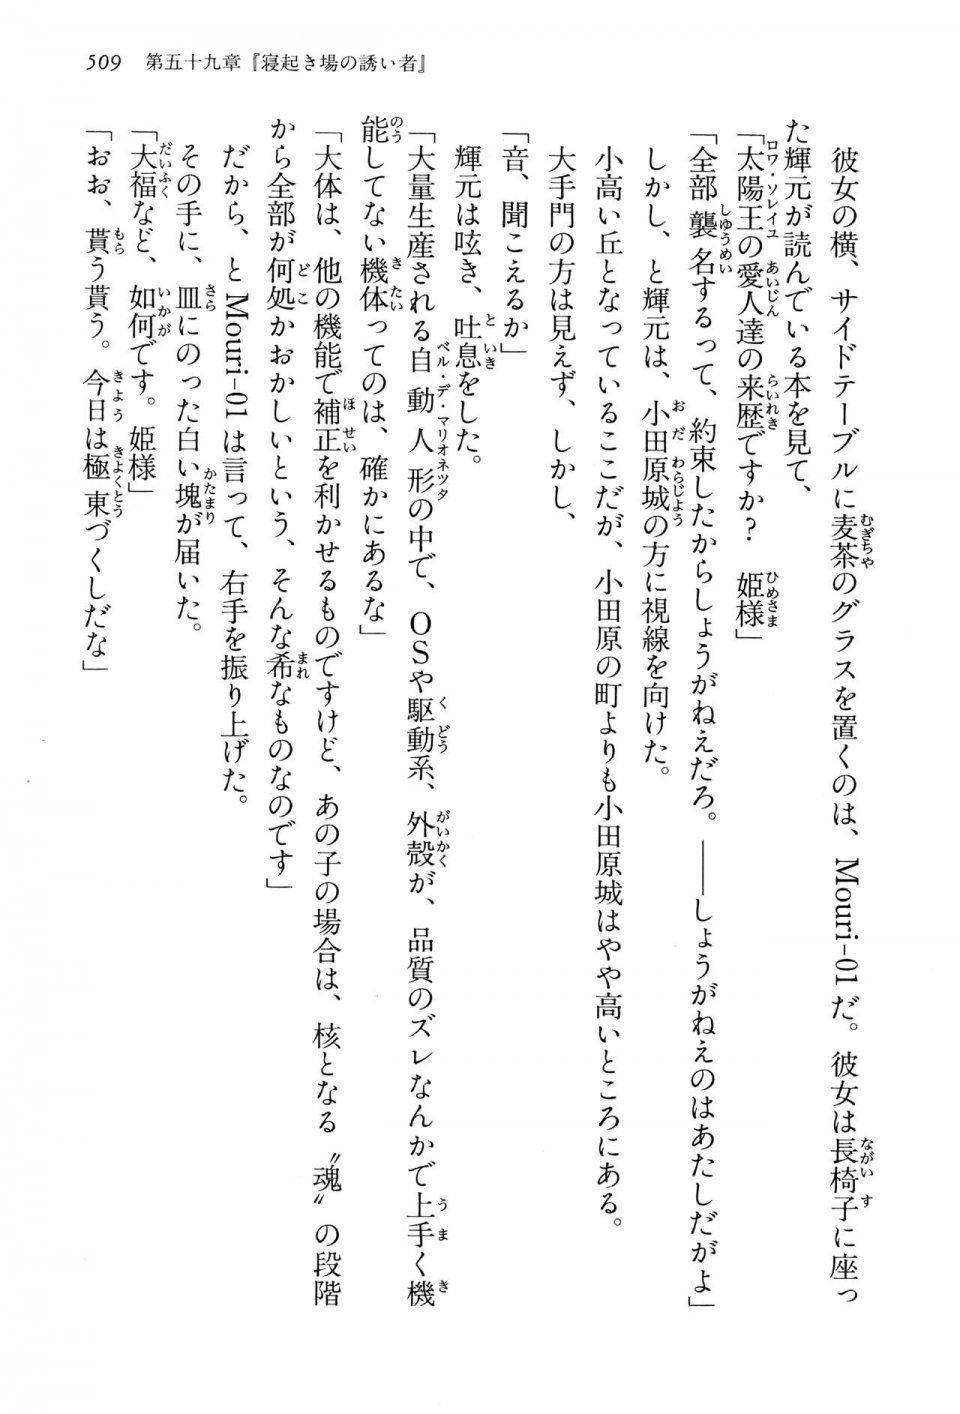 Kyoukai Senjou no Horizon LN Vol 15(6C) Part 1 - Photo #509